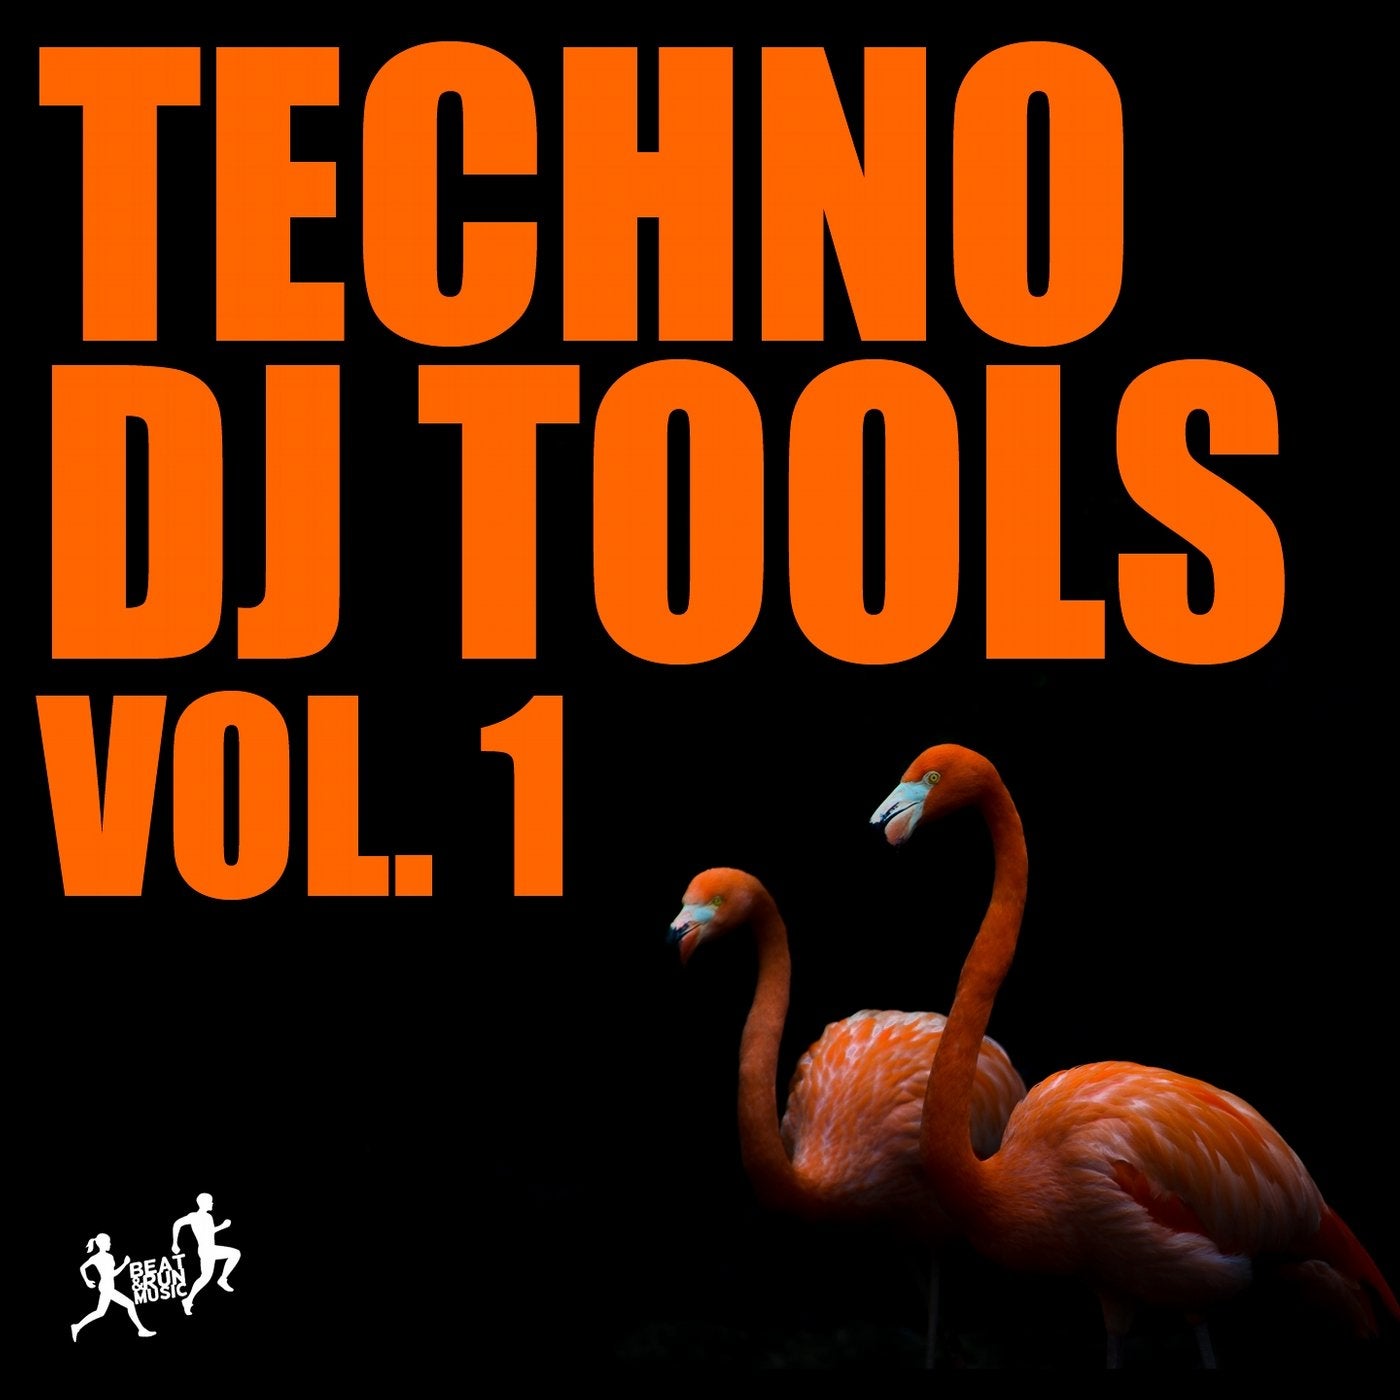 Techno DJ Tools, Vol. 1